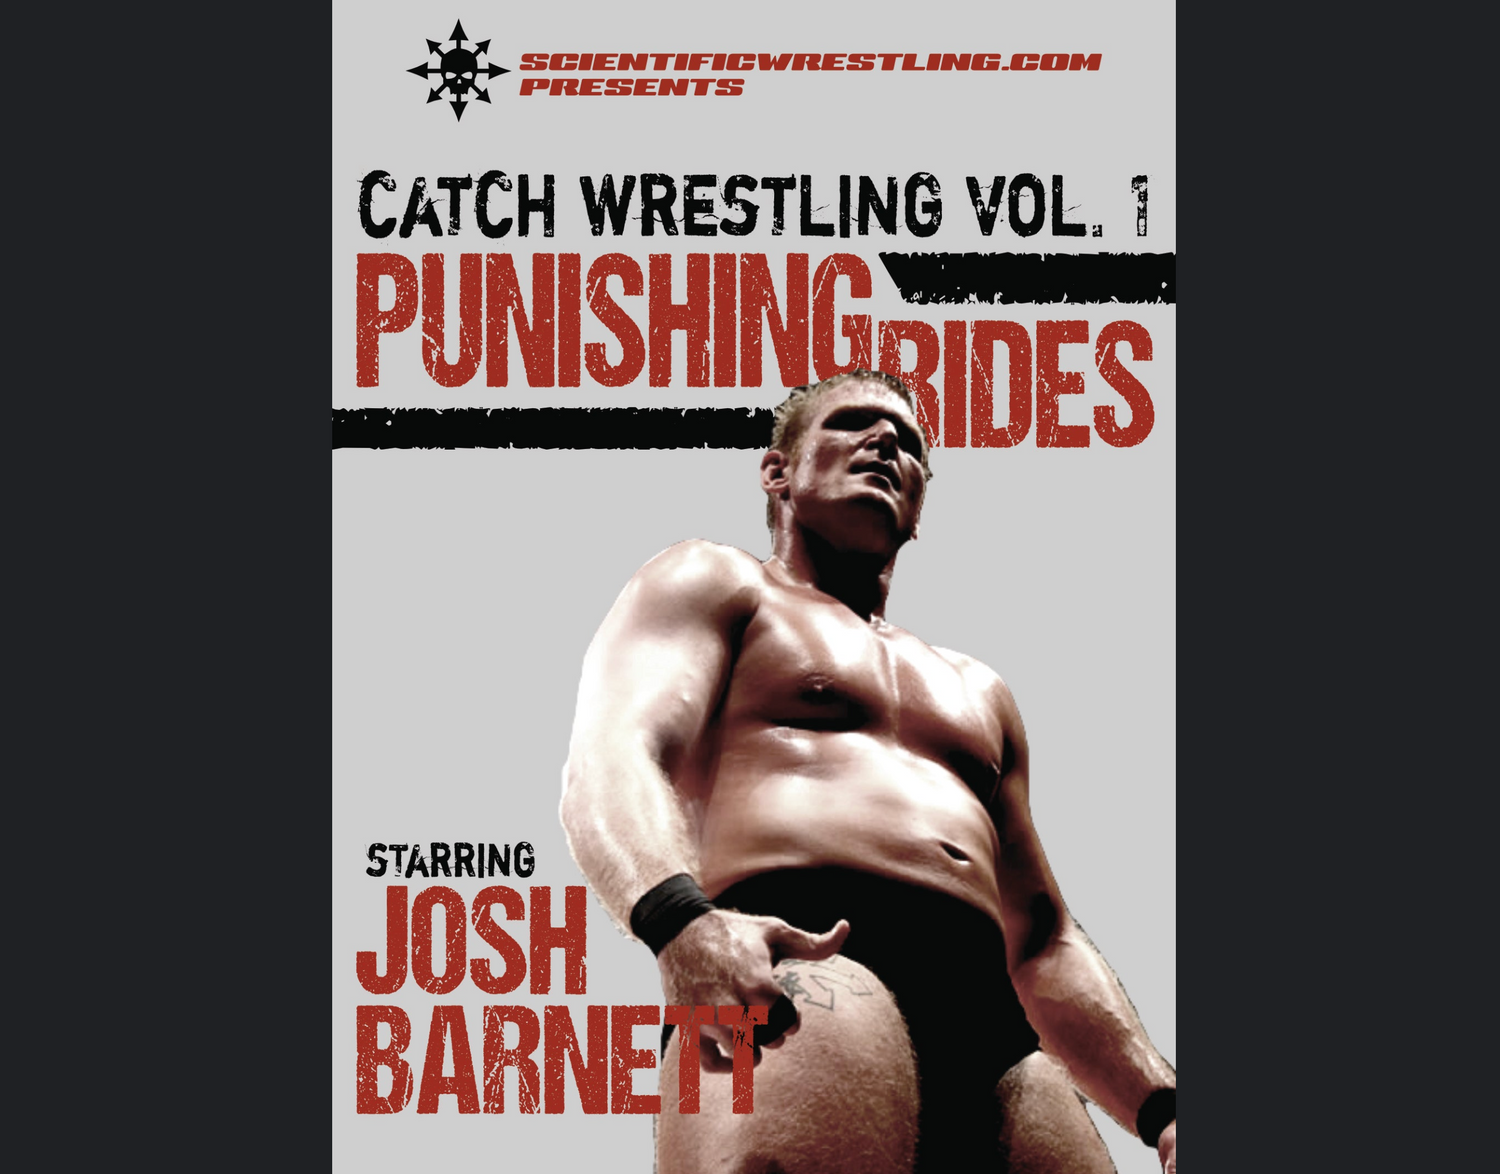 Catch Wrestling Volumen 1 de Josh Barnett - Paseos castigadores (bajo demanda)